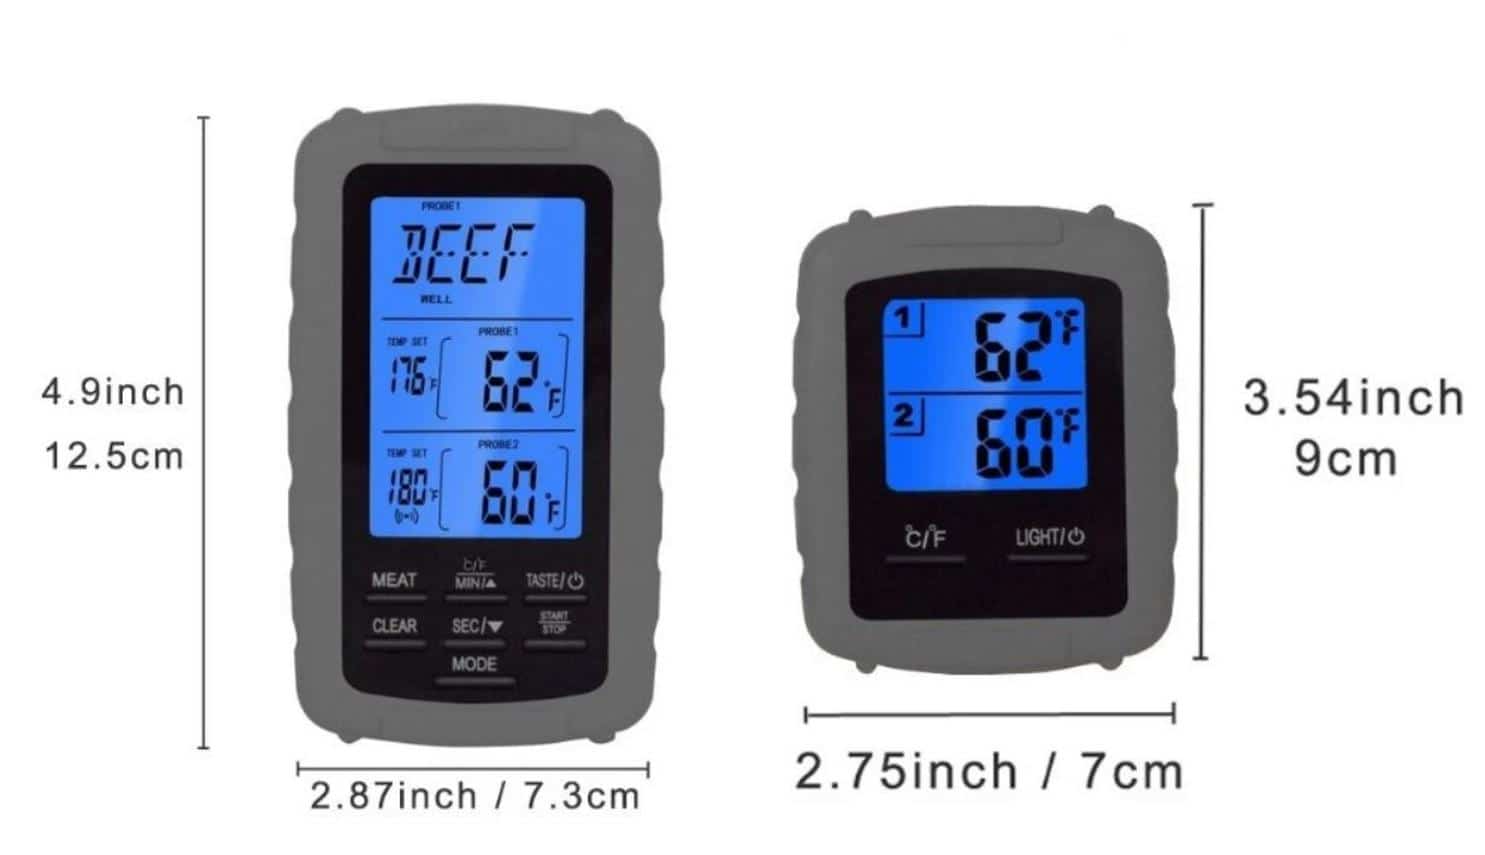 4cookz® 2 sensor draadloze BBQ thermometer Waterproof - 0-300 gr